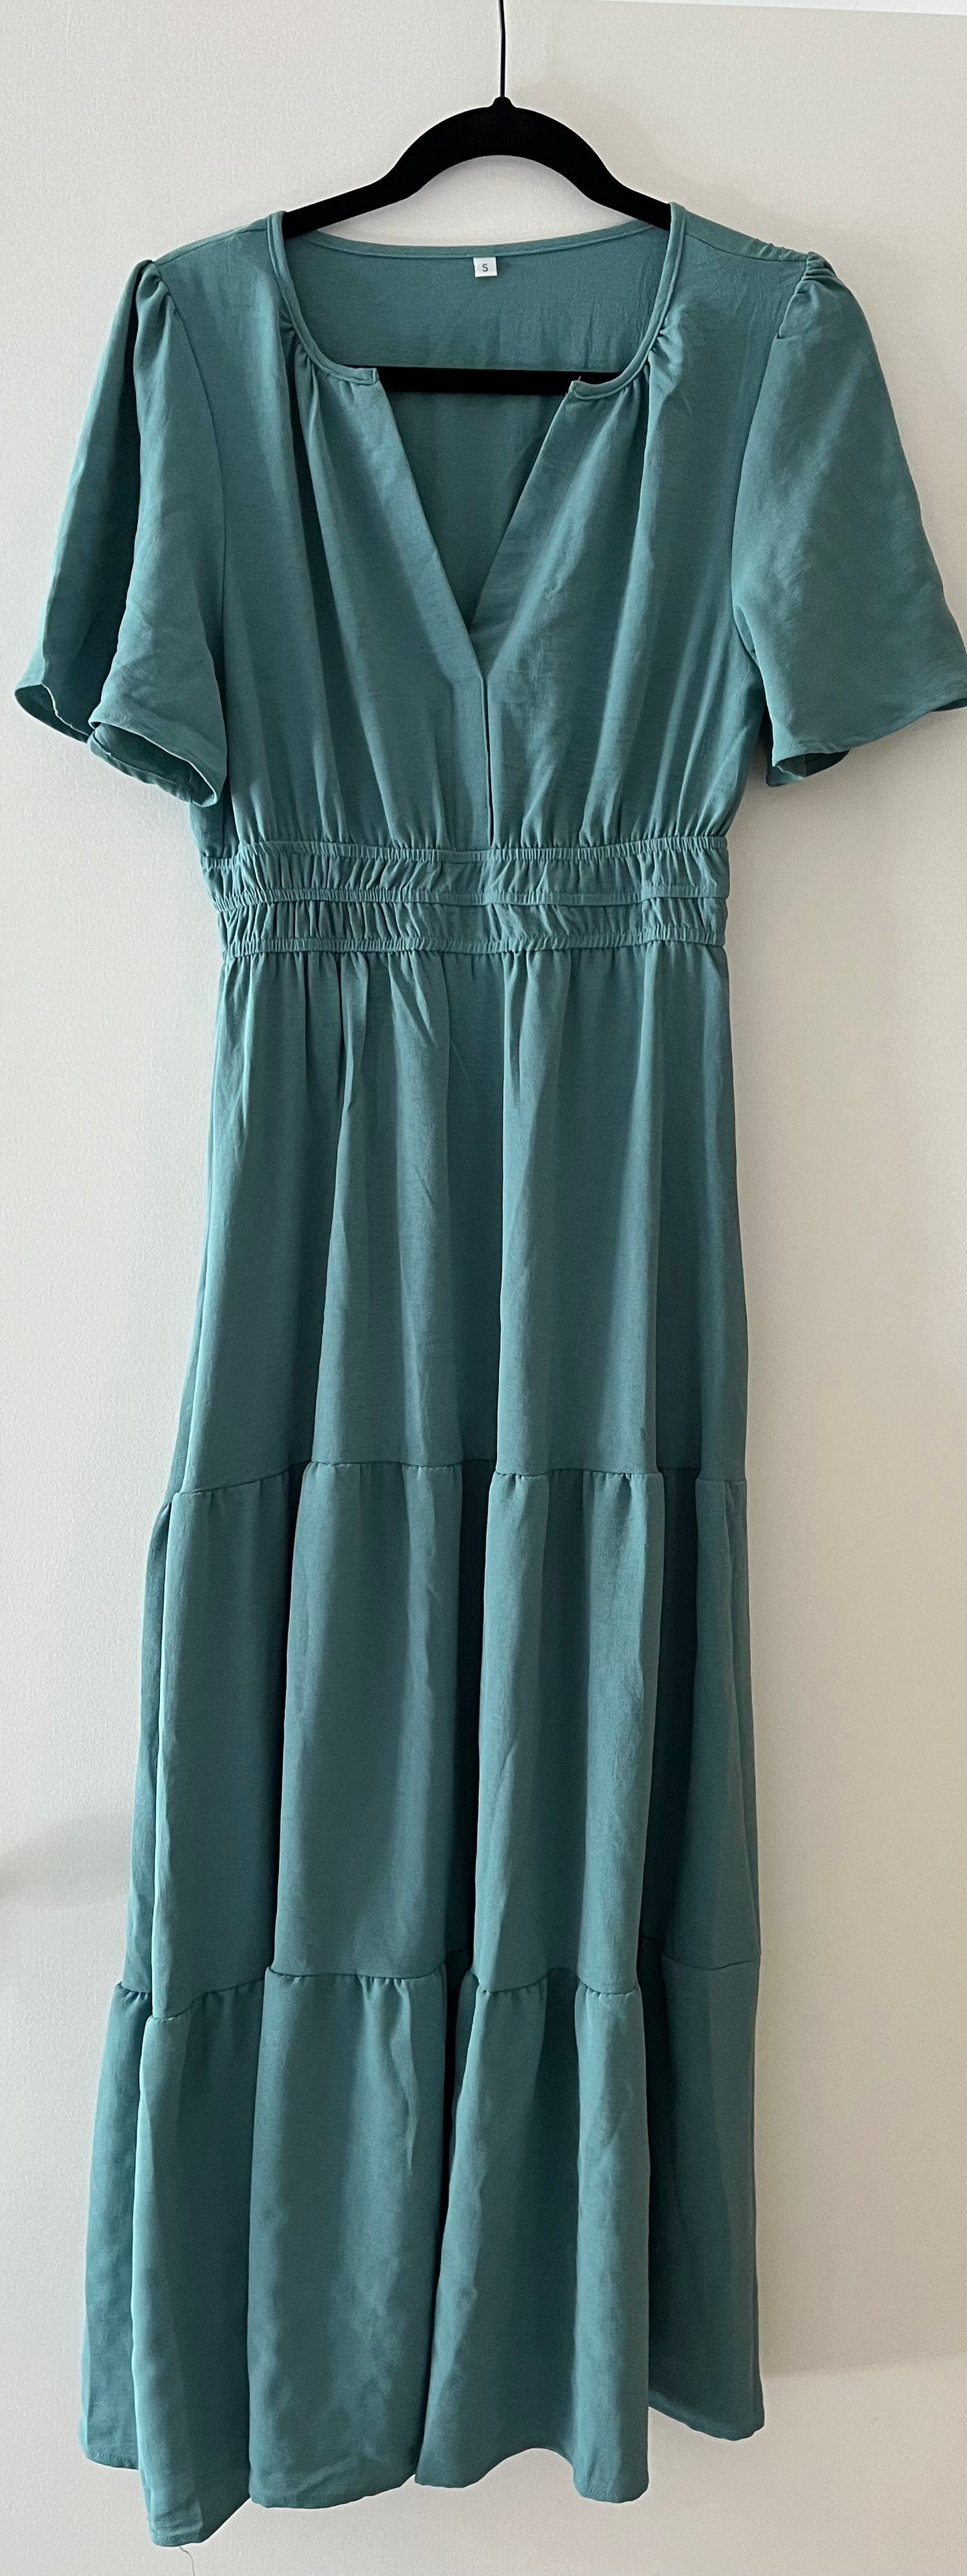 New, never worn women's size small long dress (45244)